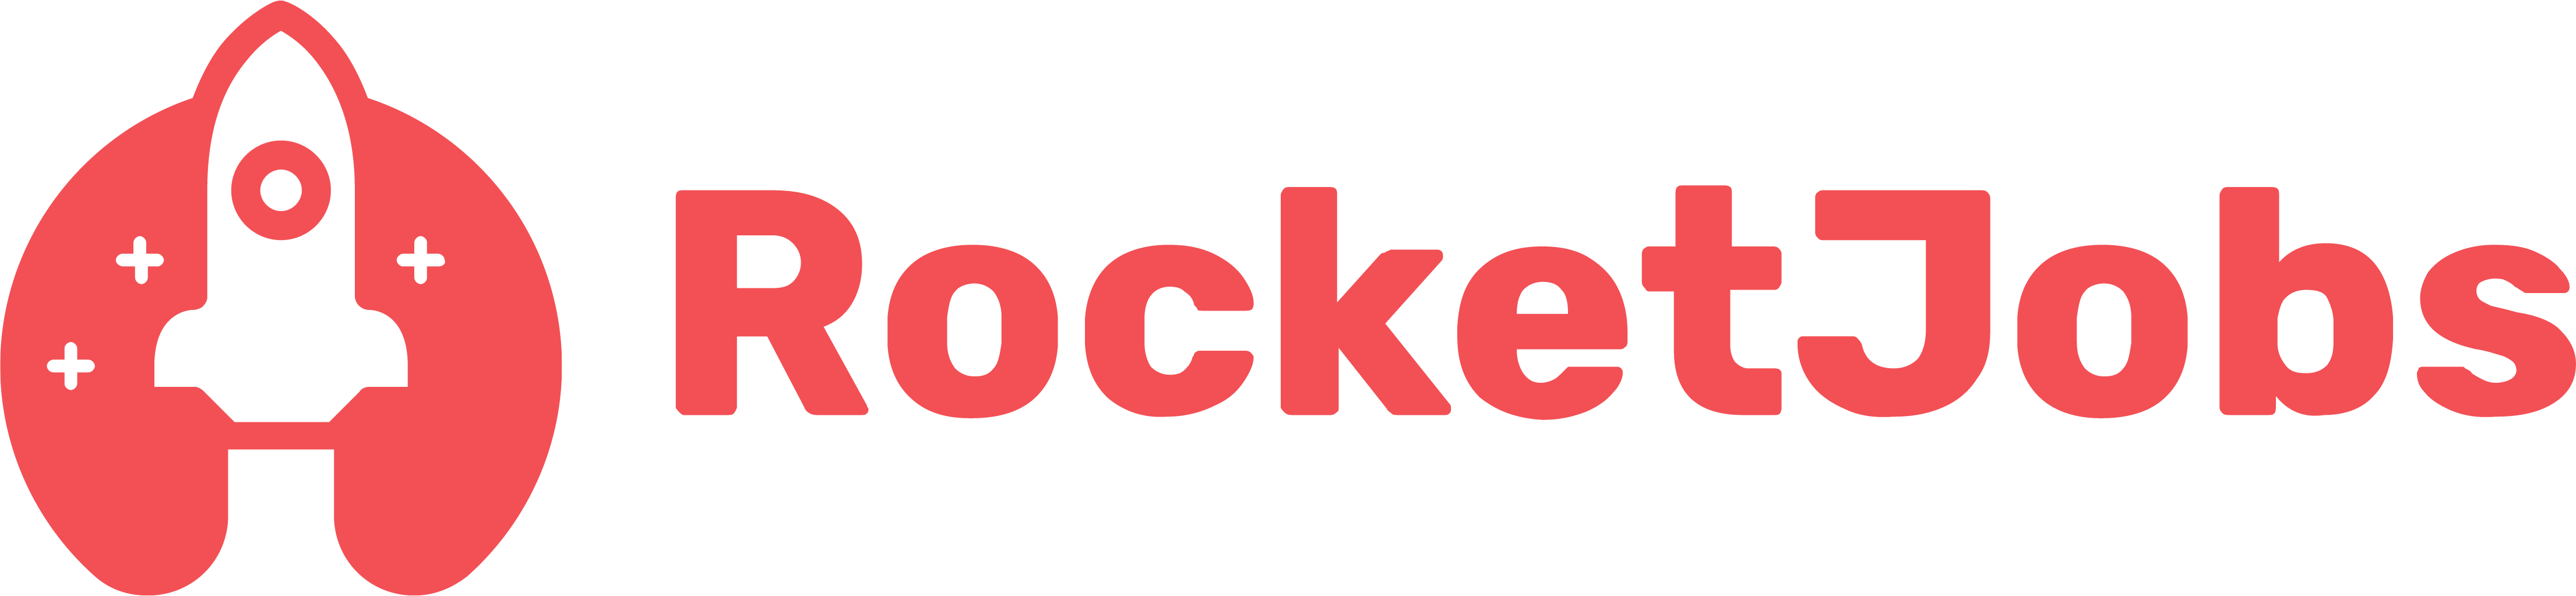 Rocket Jobs